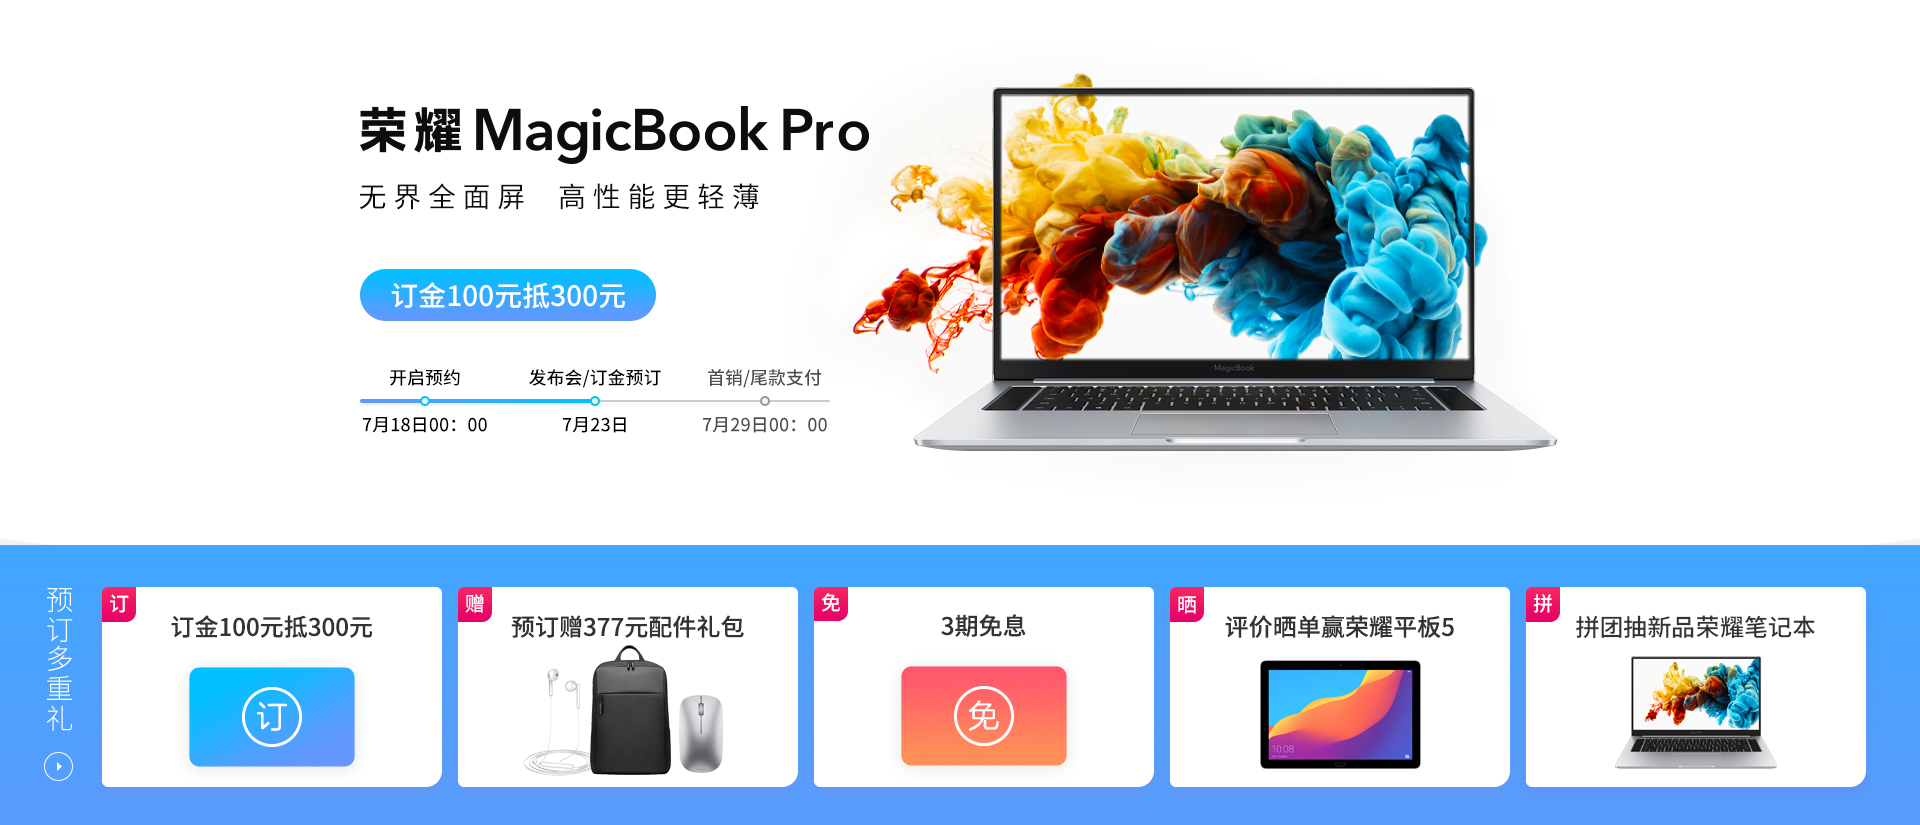 MagicBook-pro-PC-banner.jpg